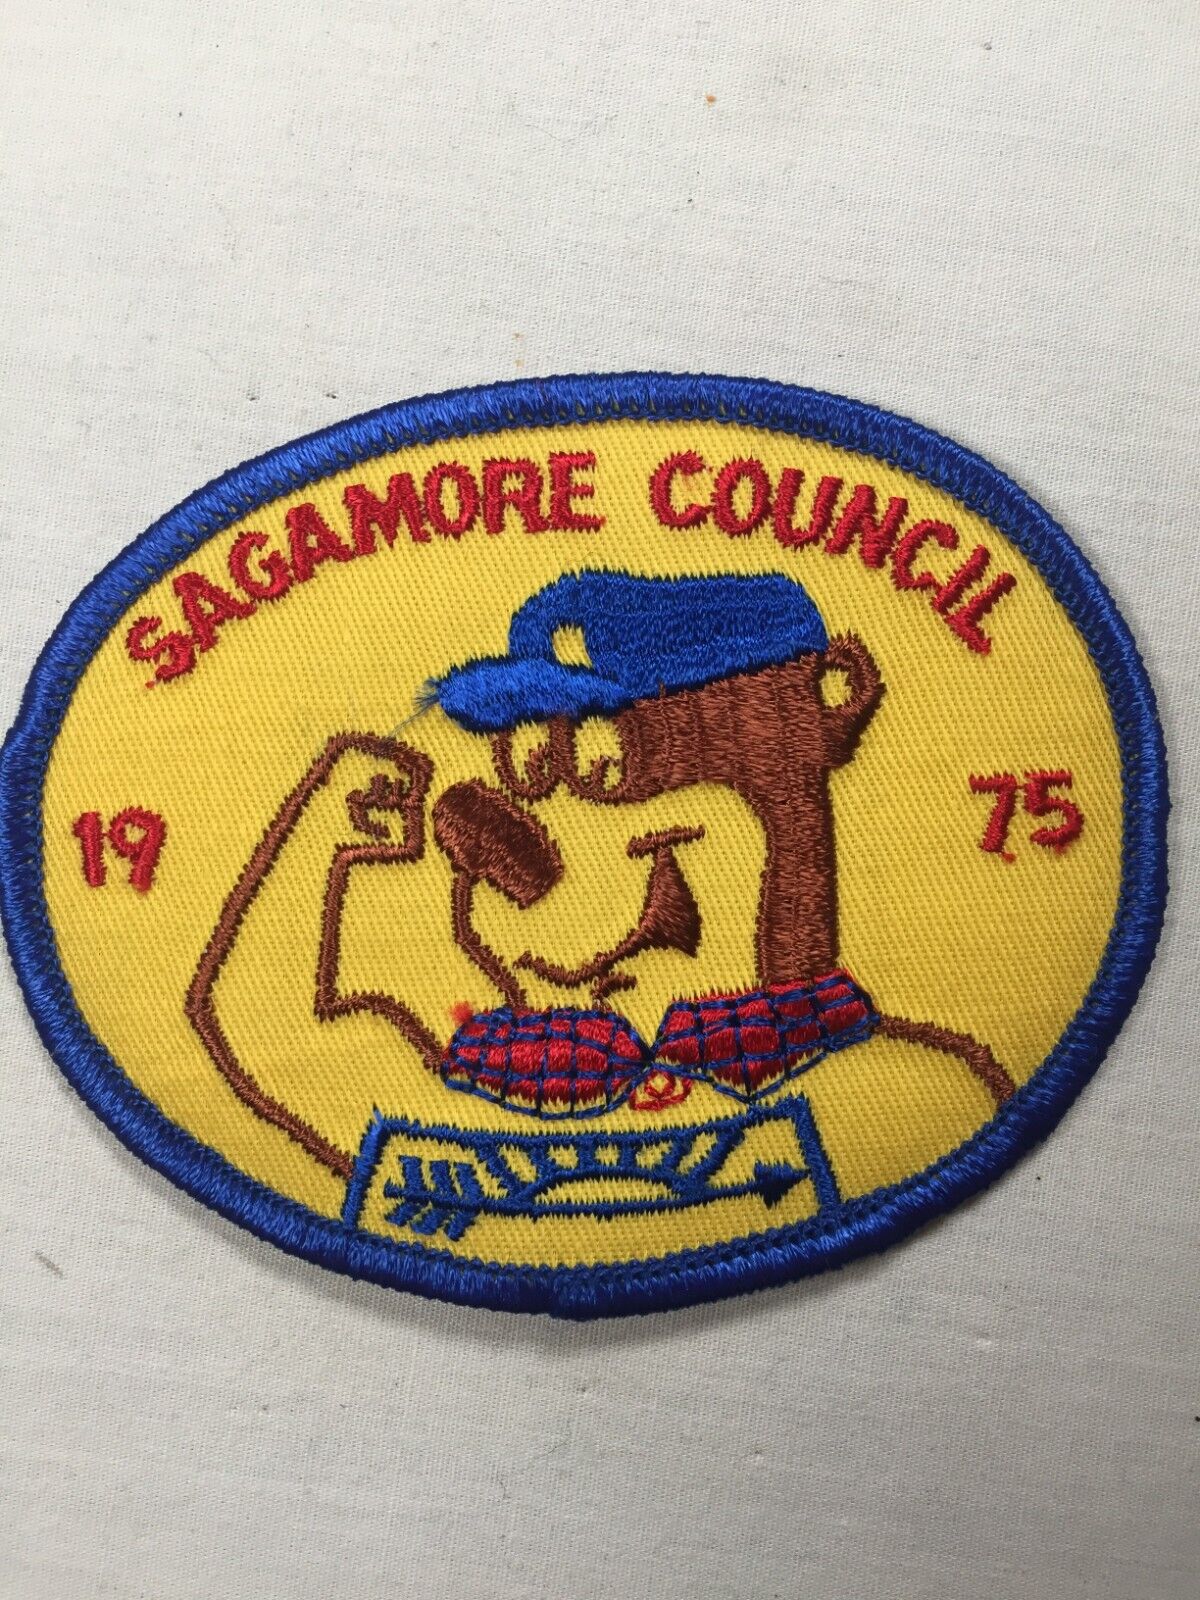 1975 Sagamore Council Webelos Camporee BSA Patch